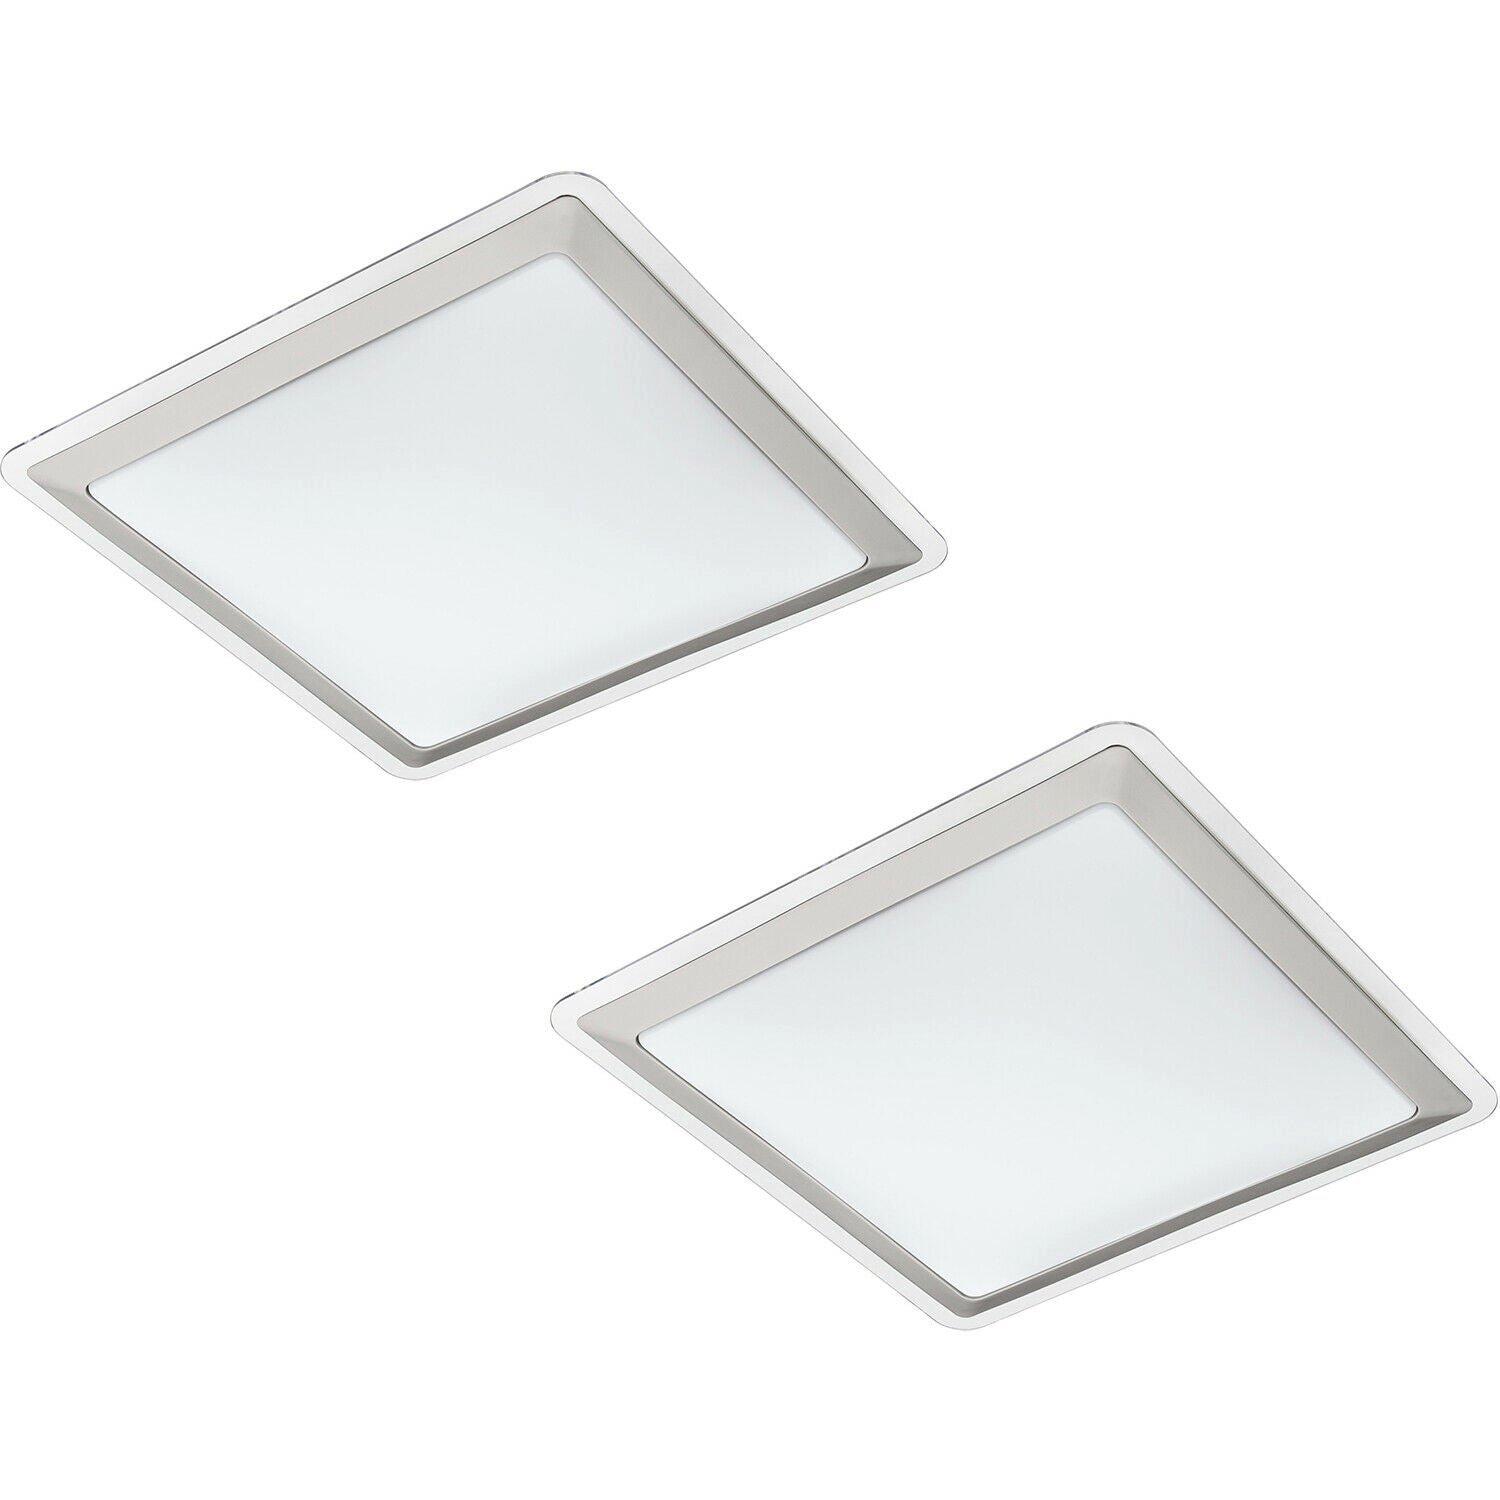 2 PACK Wall Flush Ceiling Light Colour White Shade White Silver Plastic LED 24W